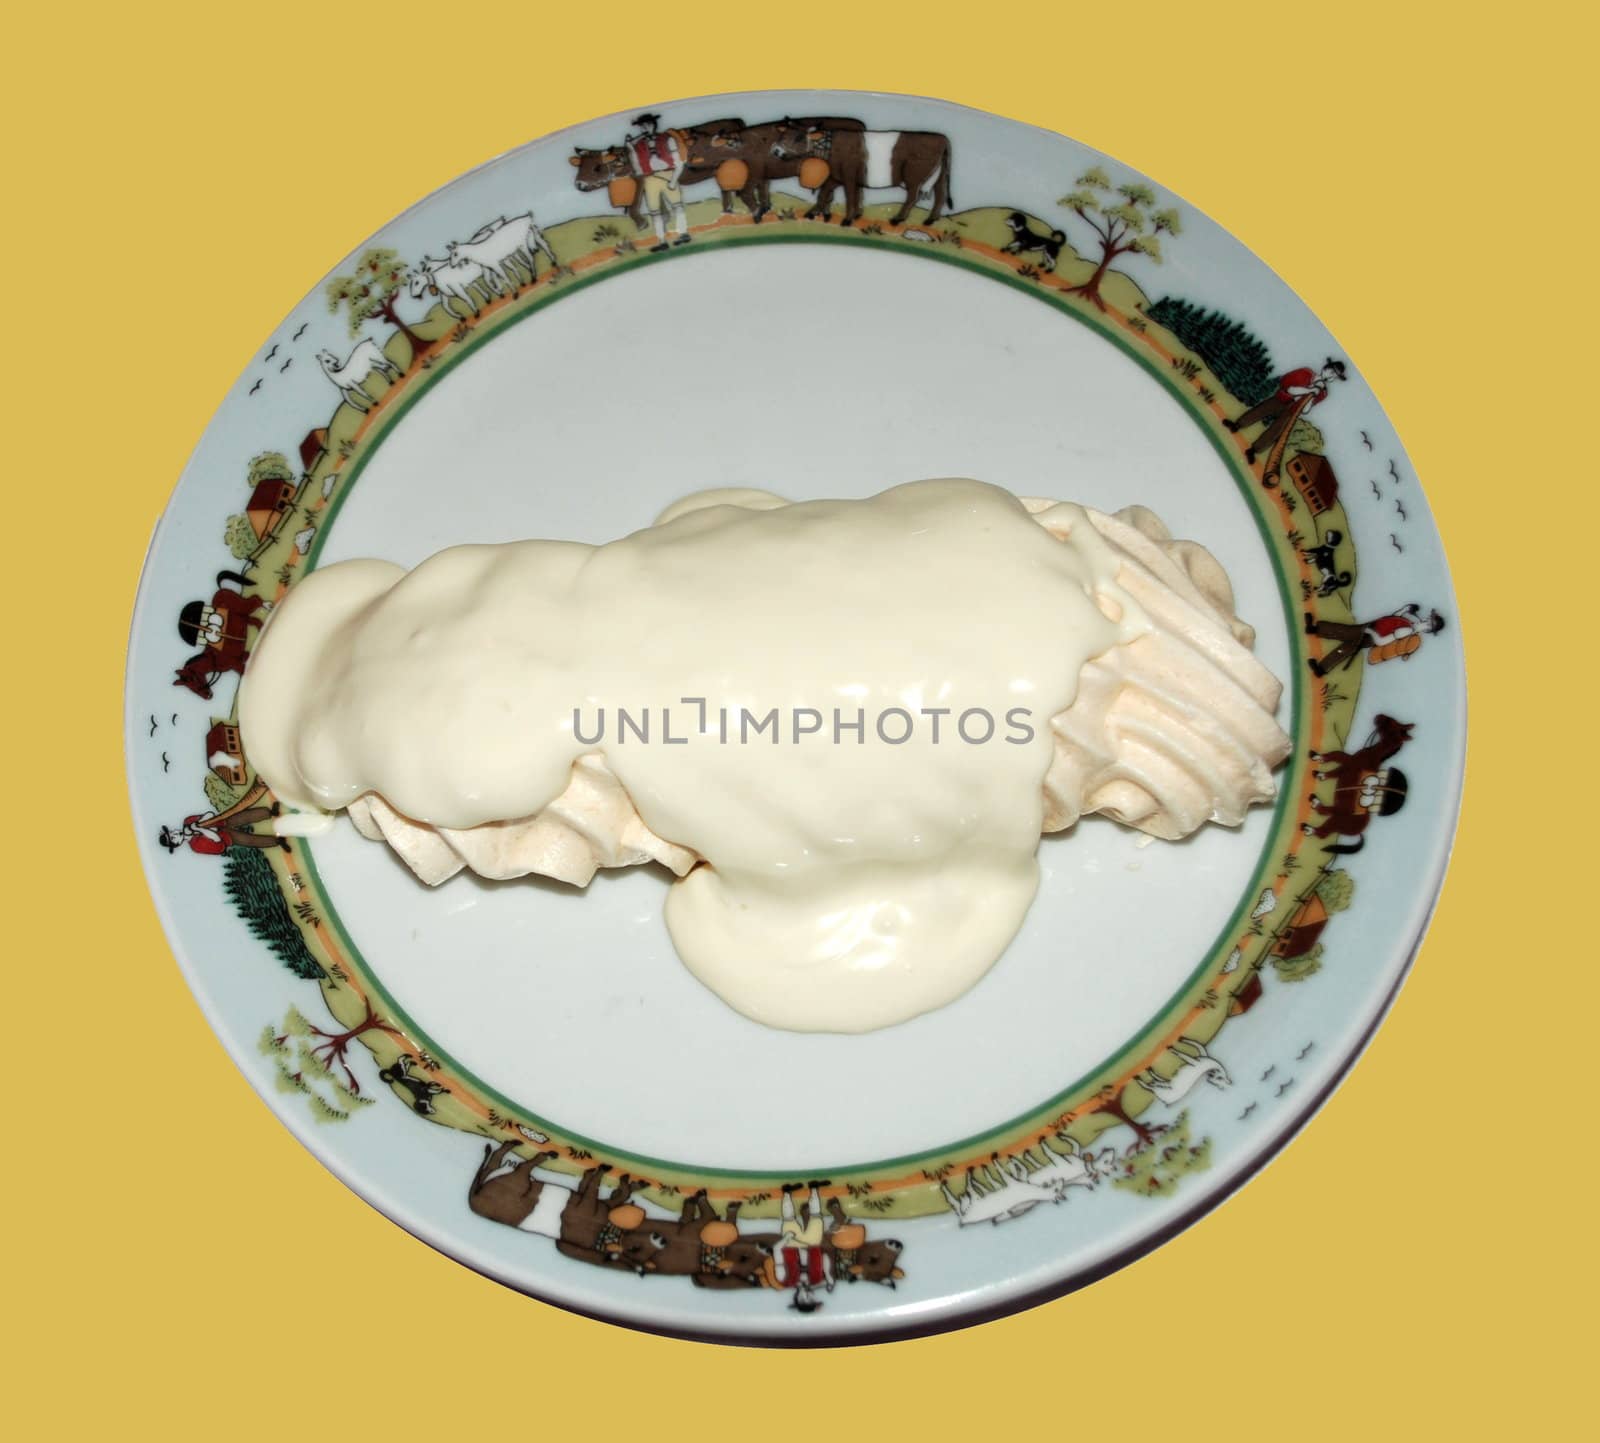 swiss meringue with Gruyere's cream by JASCKAL